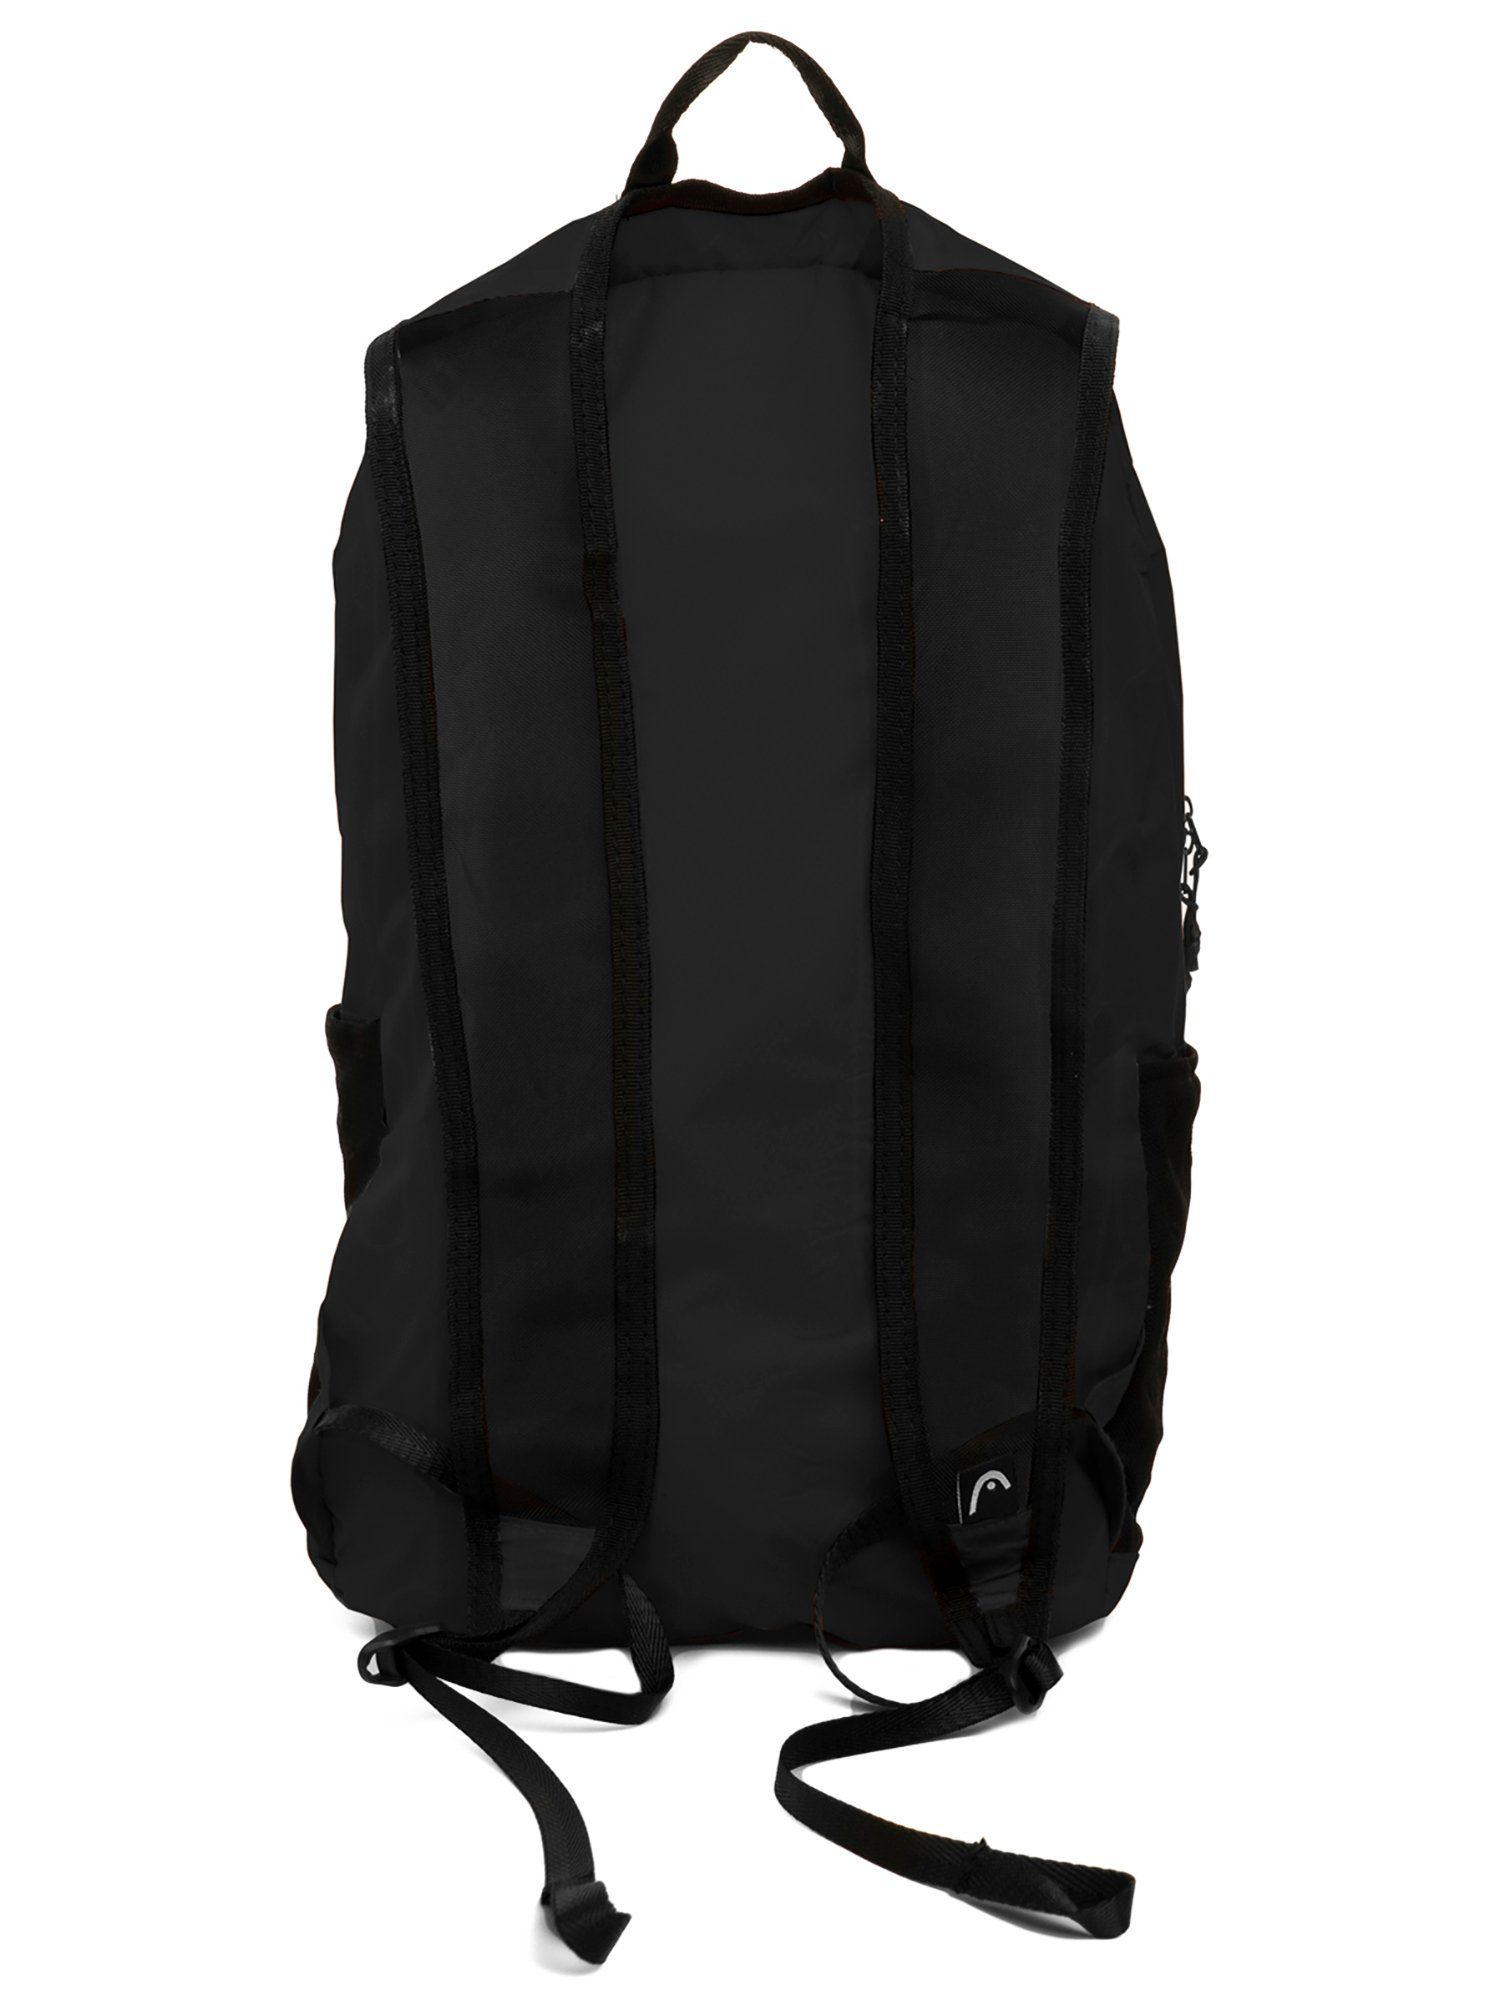 Foldable Backpack Schwarz Head Rucksack